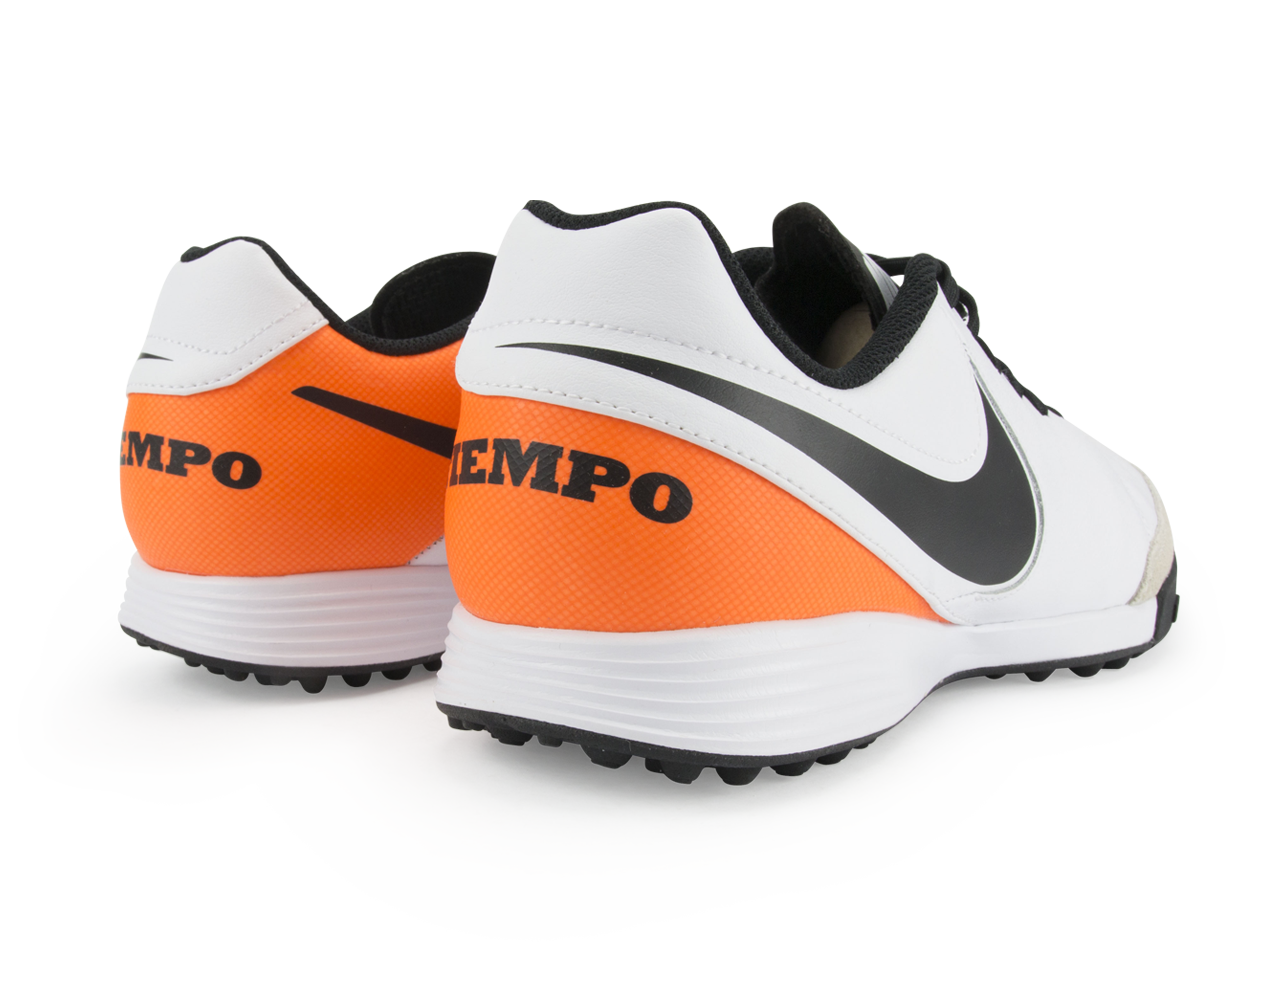 Nike Men's Tiempo Genio Leather Turf Soccer Shoes White/Black/Total Orange